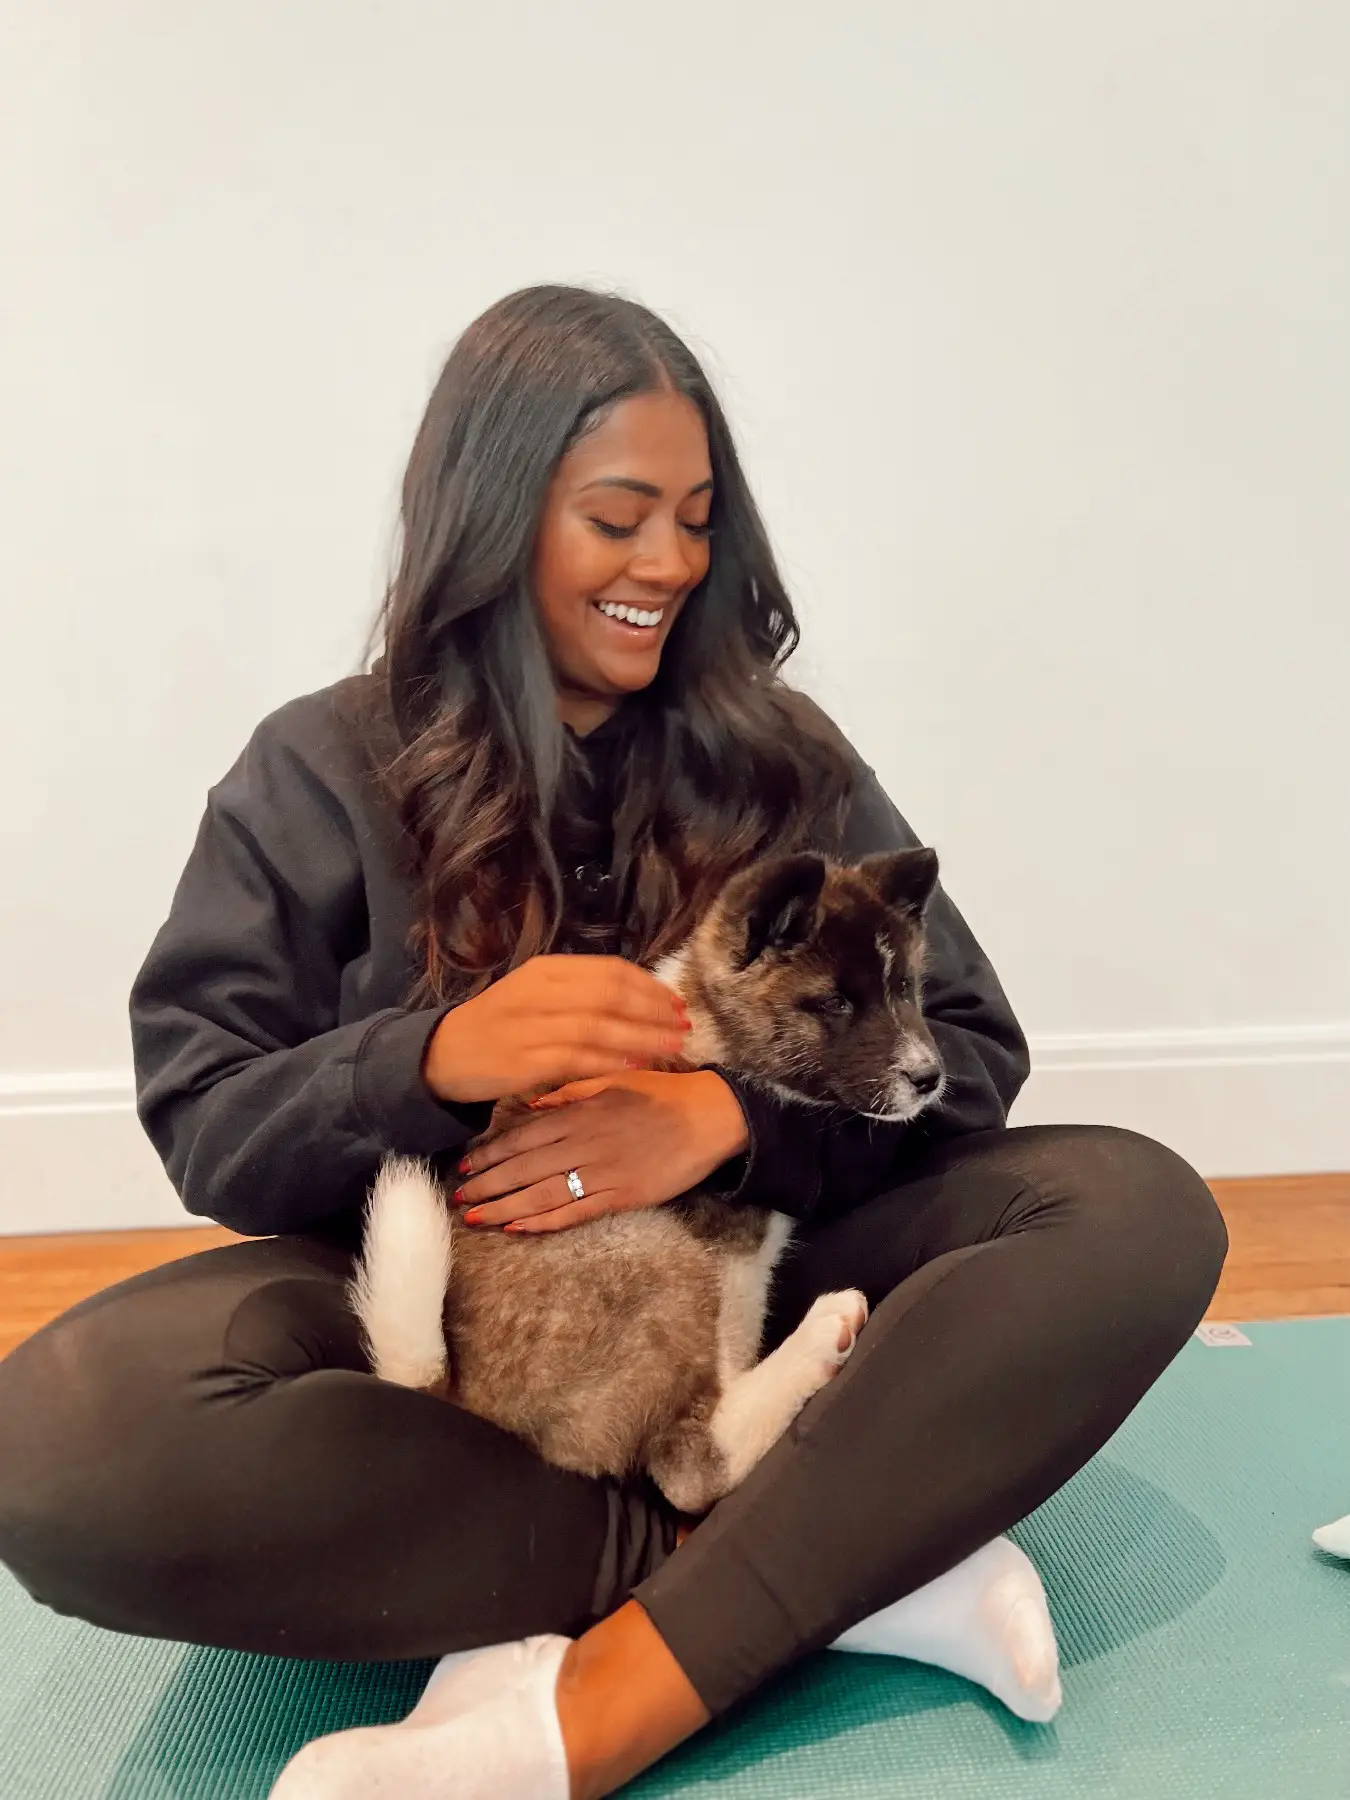 BarePaws Yoga – Puppy yoga